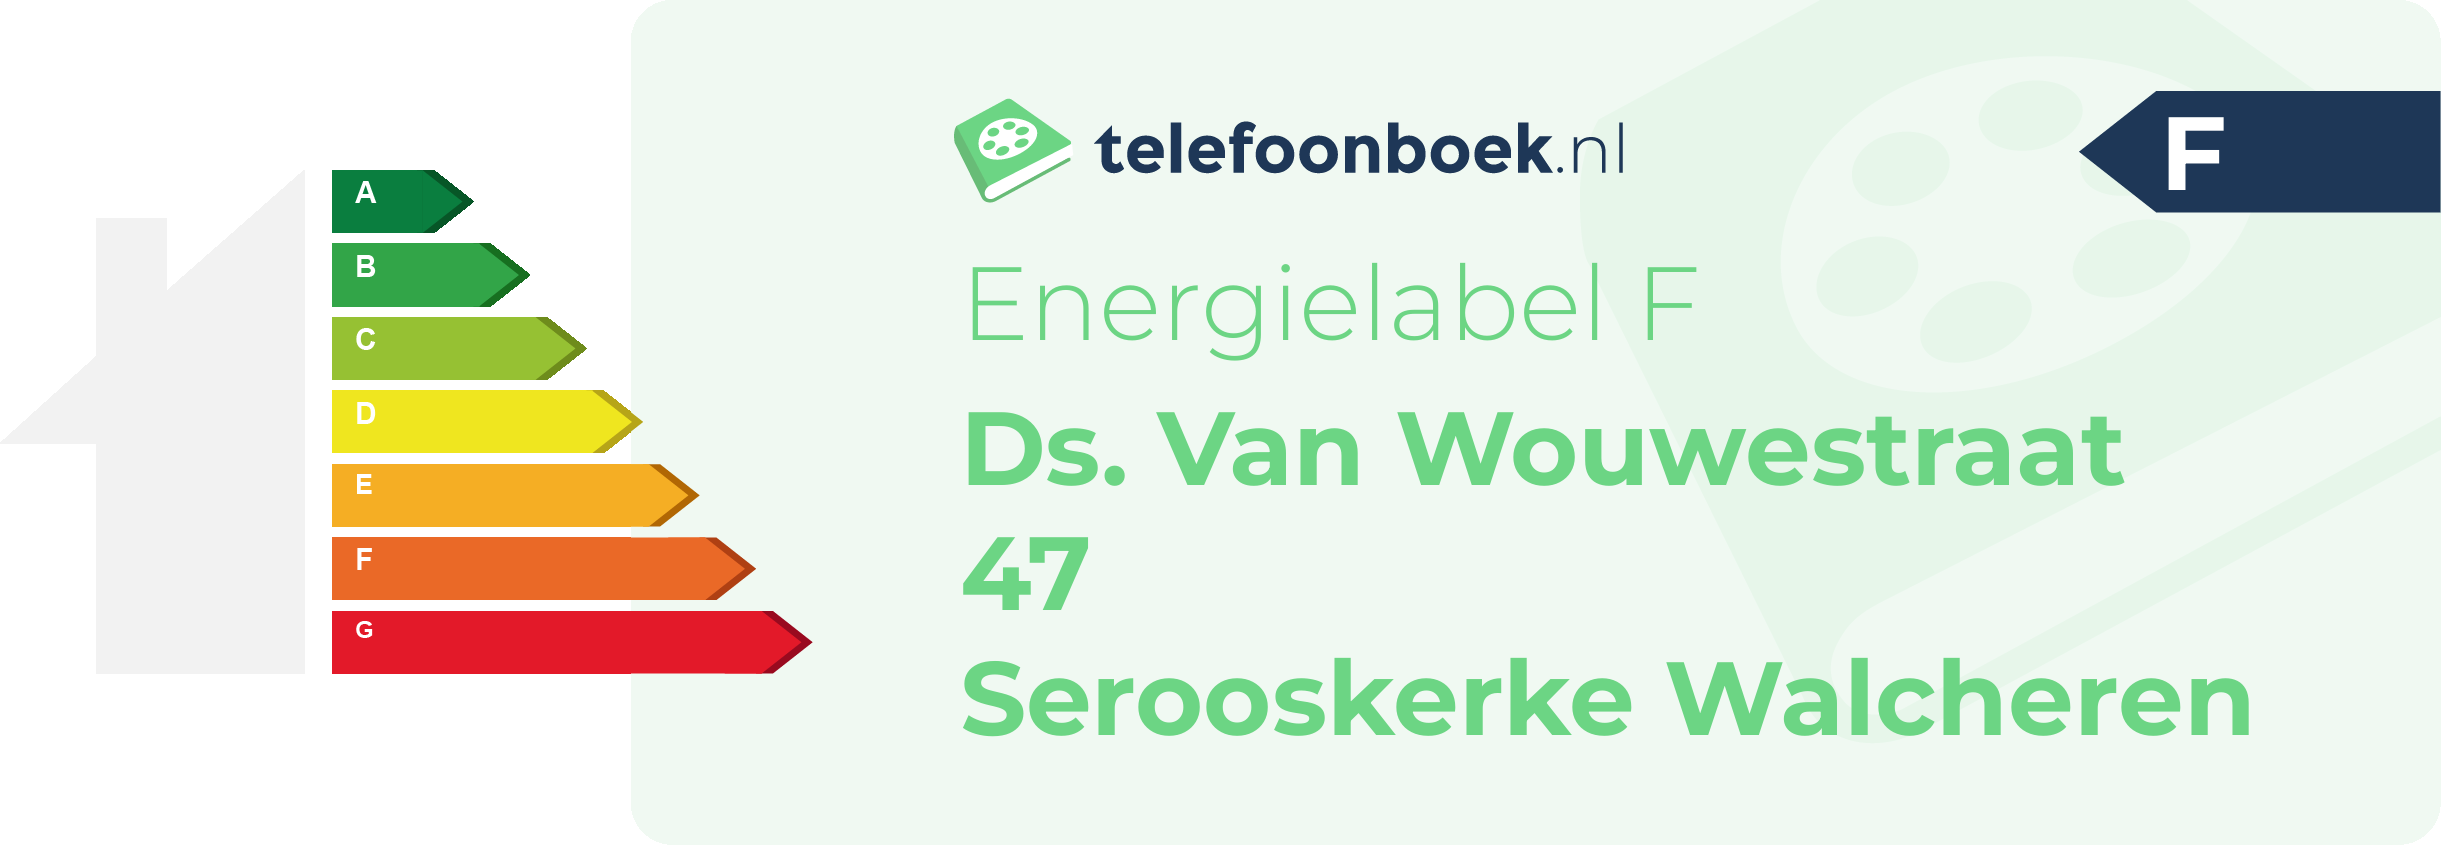 Energielabel Ds. Van Wouwestraat 47 Serooskerke Walcheren